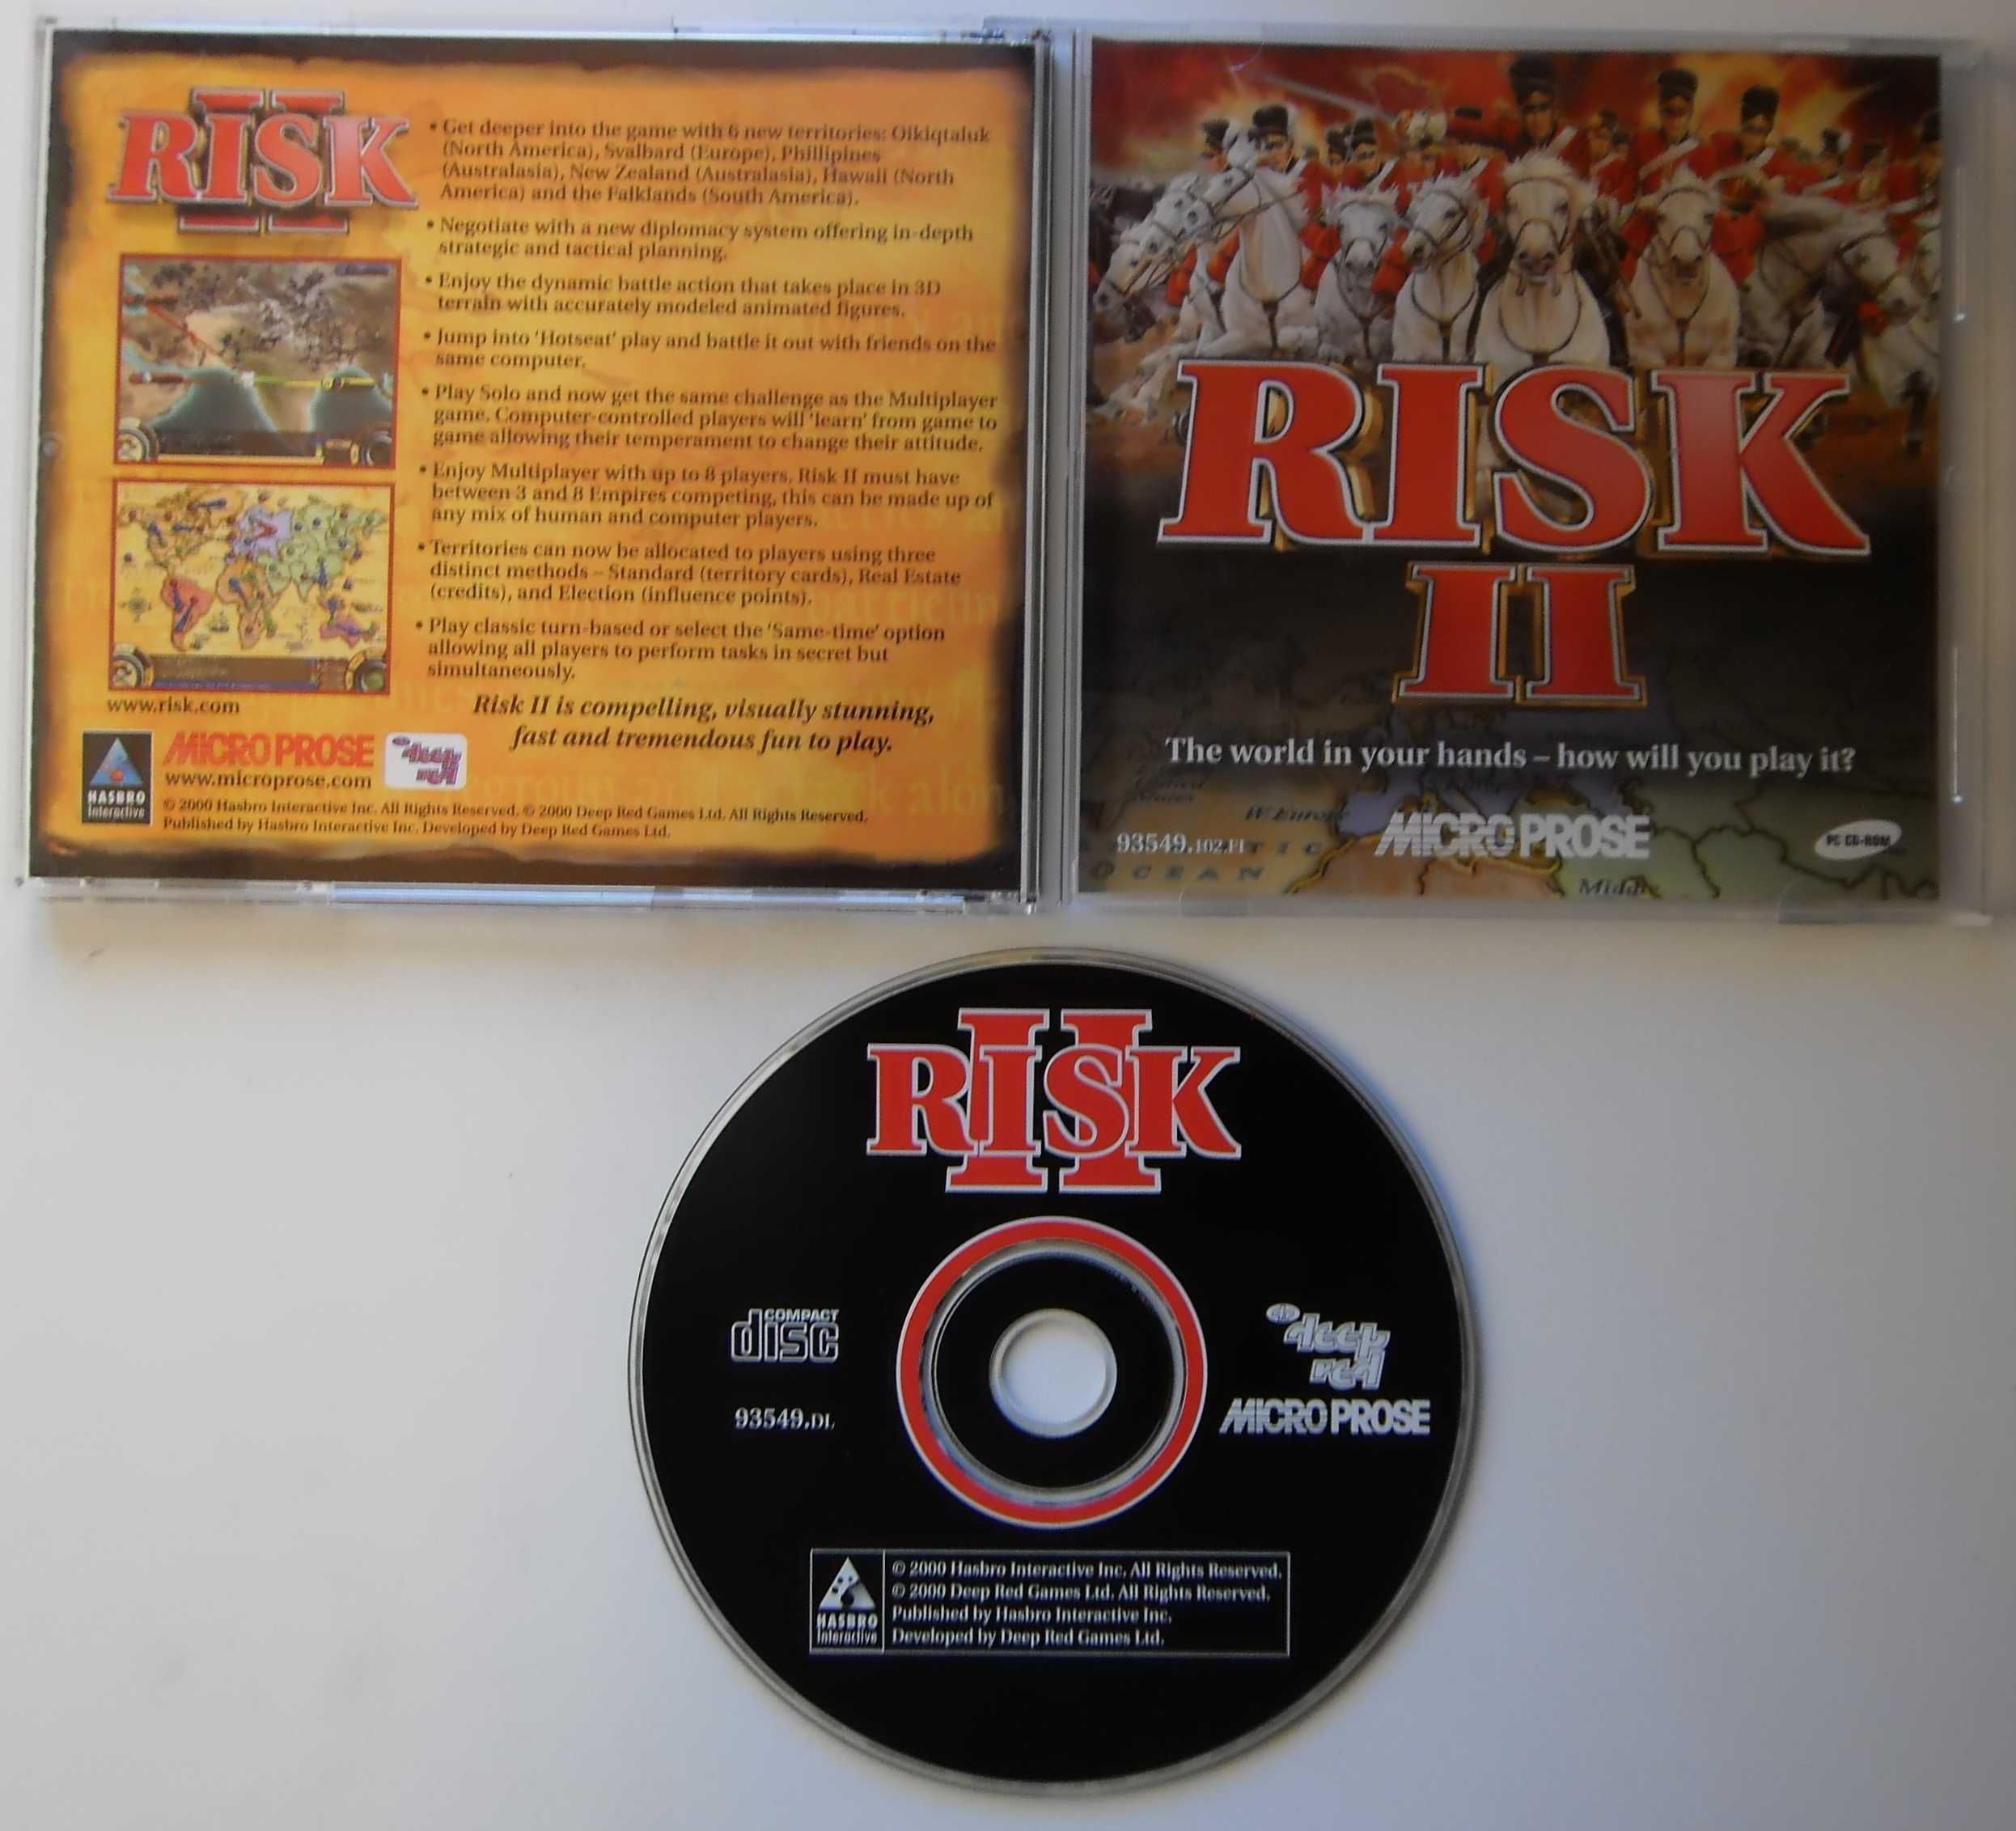 Jogo PC/CD-ROM "Risk II" 1 CD / Ano 2000 p/ Windows XP, Windows 98